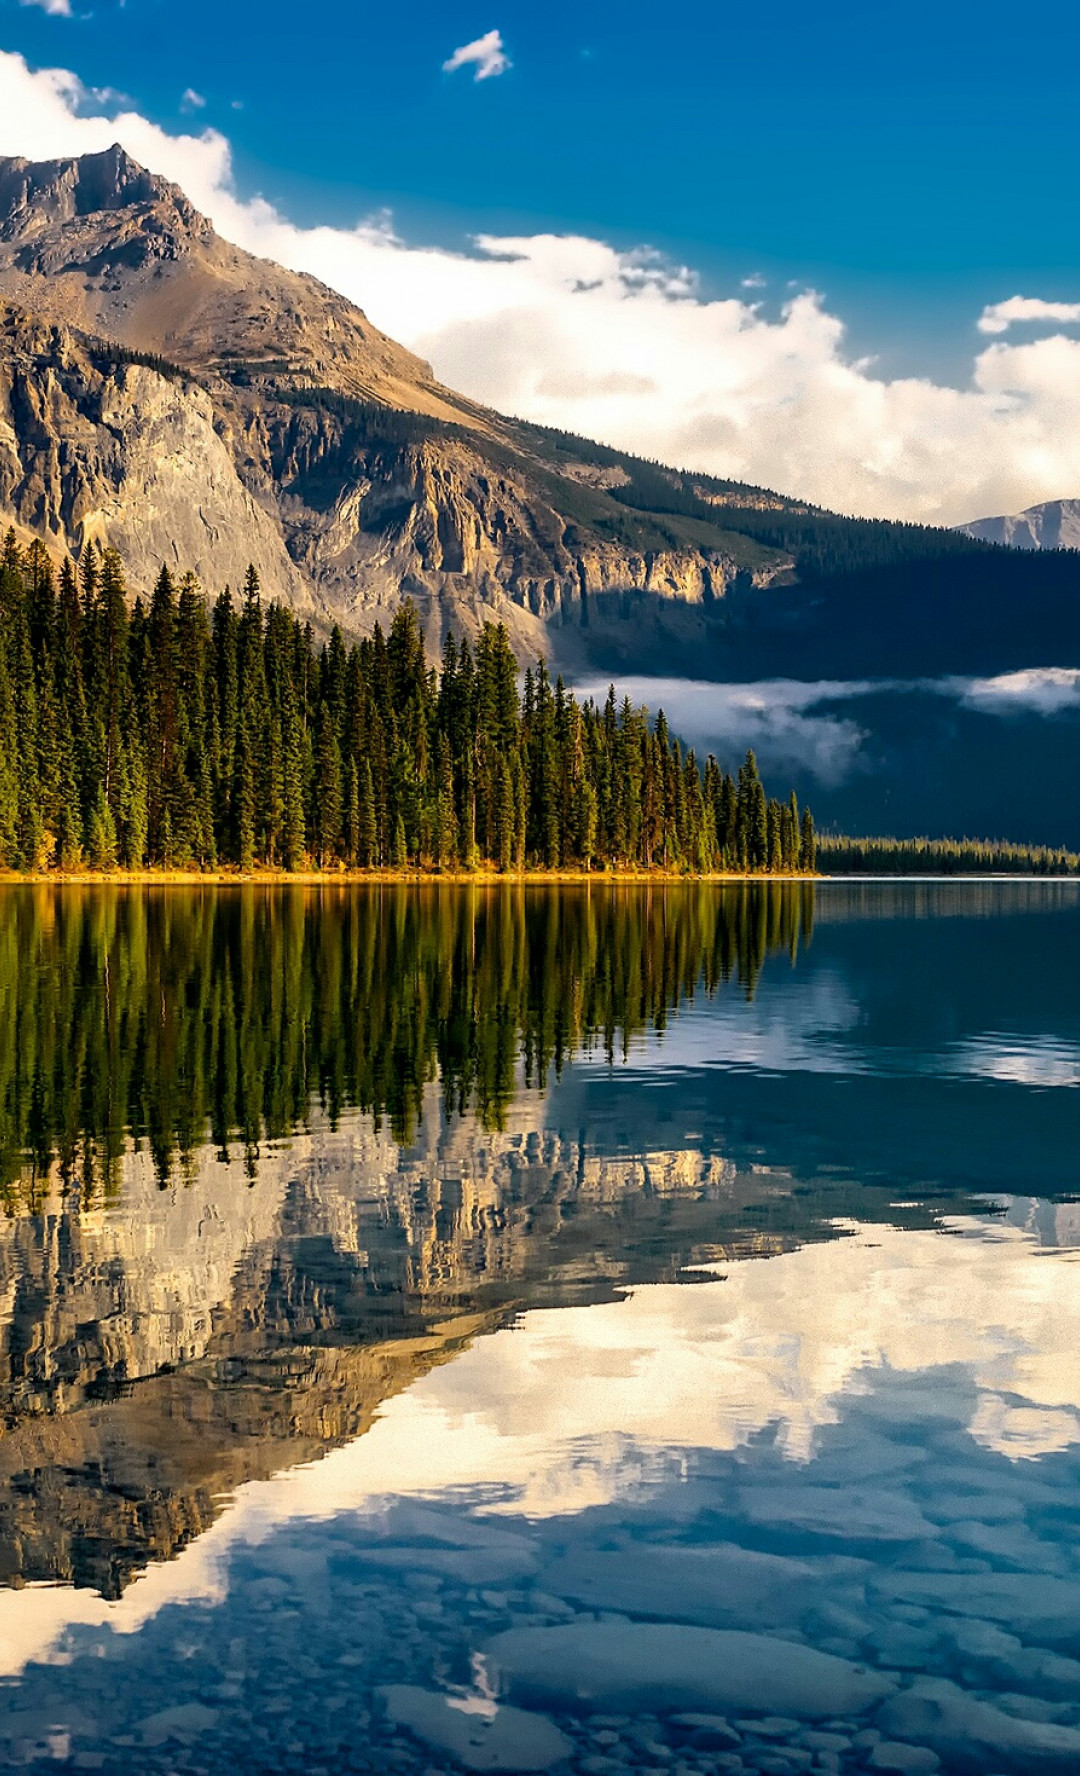 Kanada i piękny widok na góry i jezioro